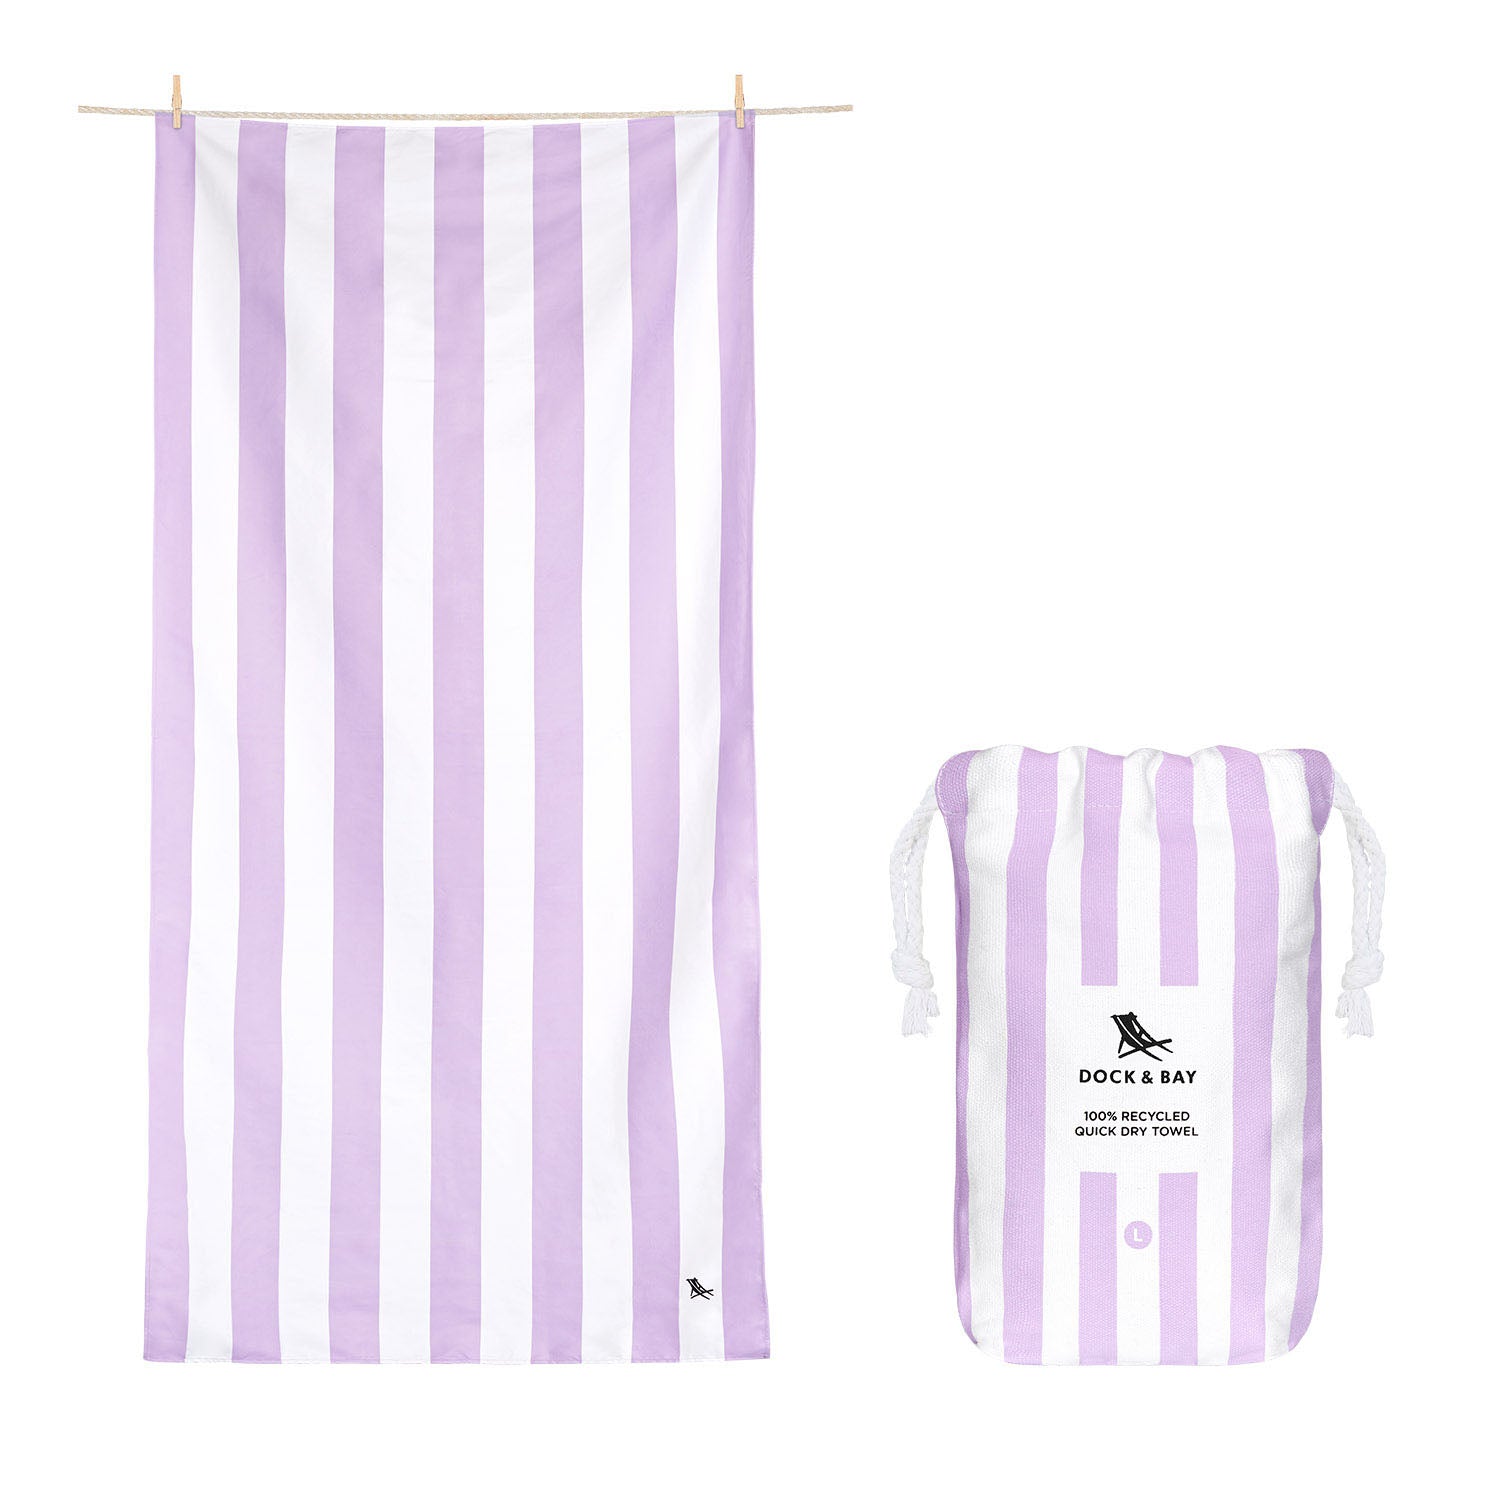 Lilac beach towel